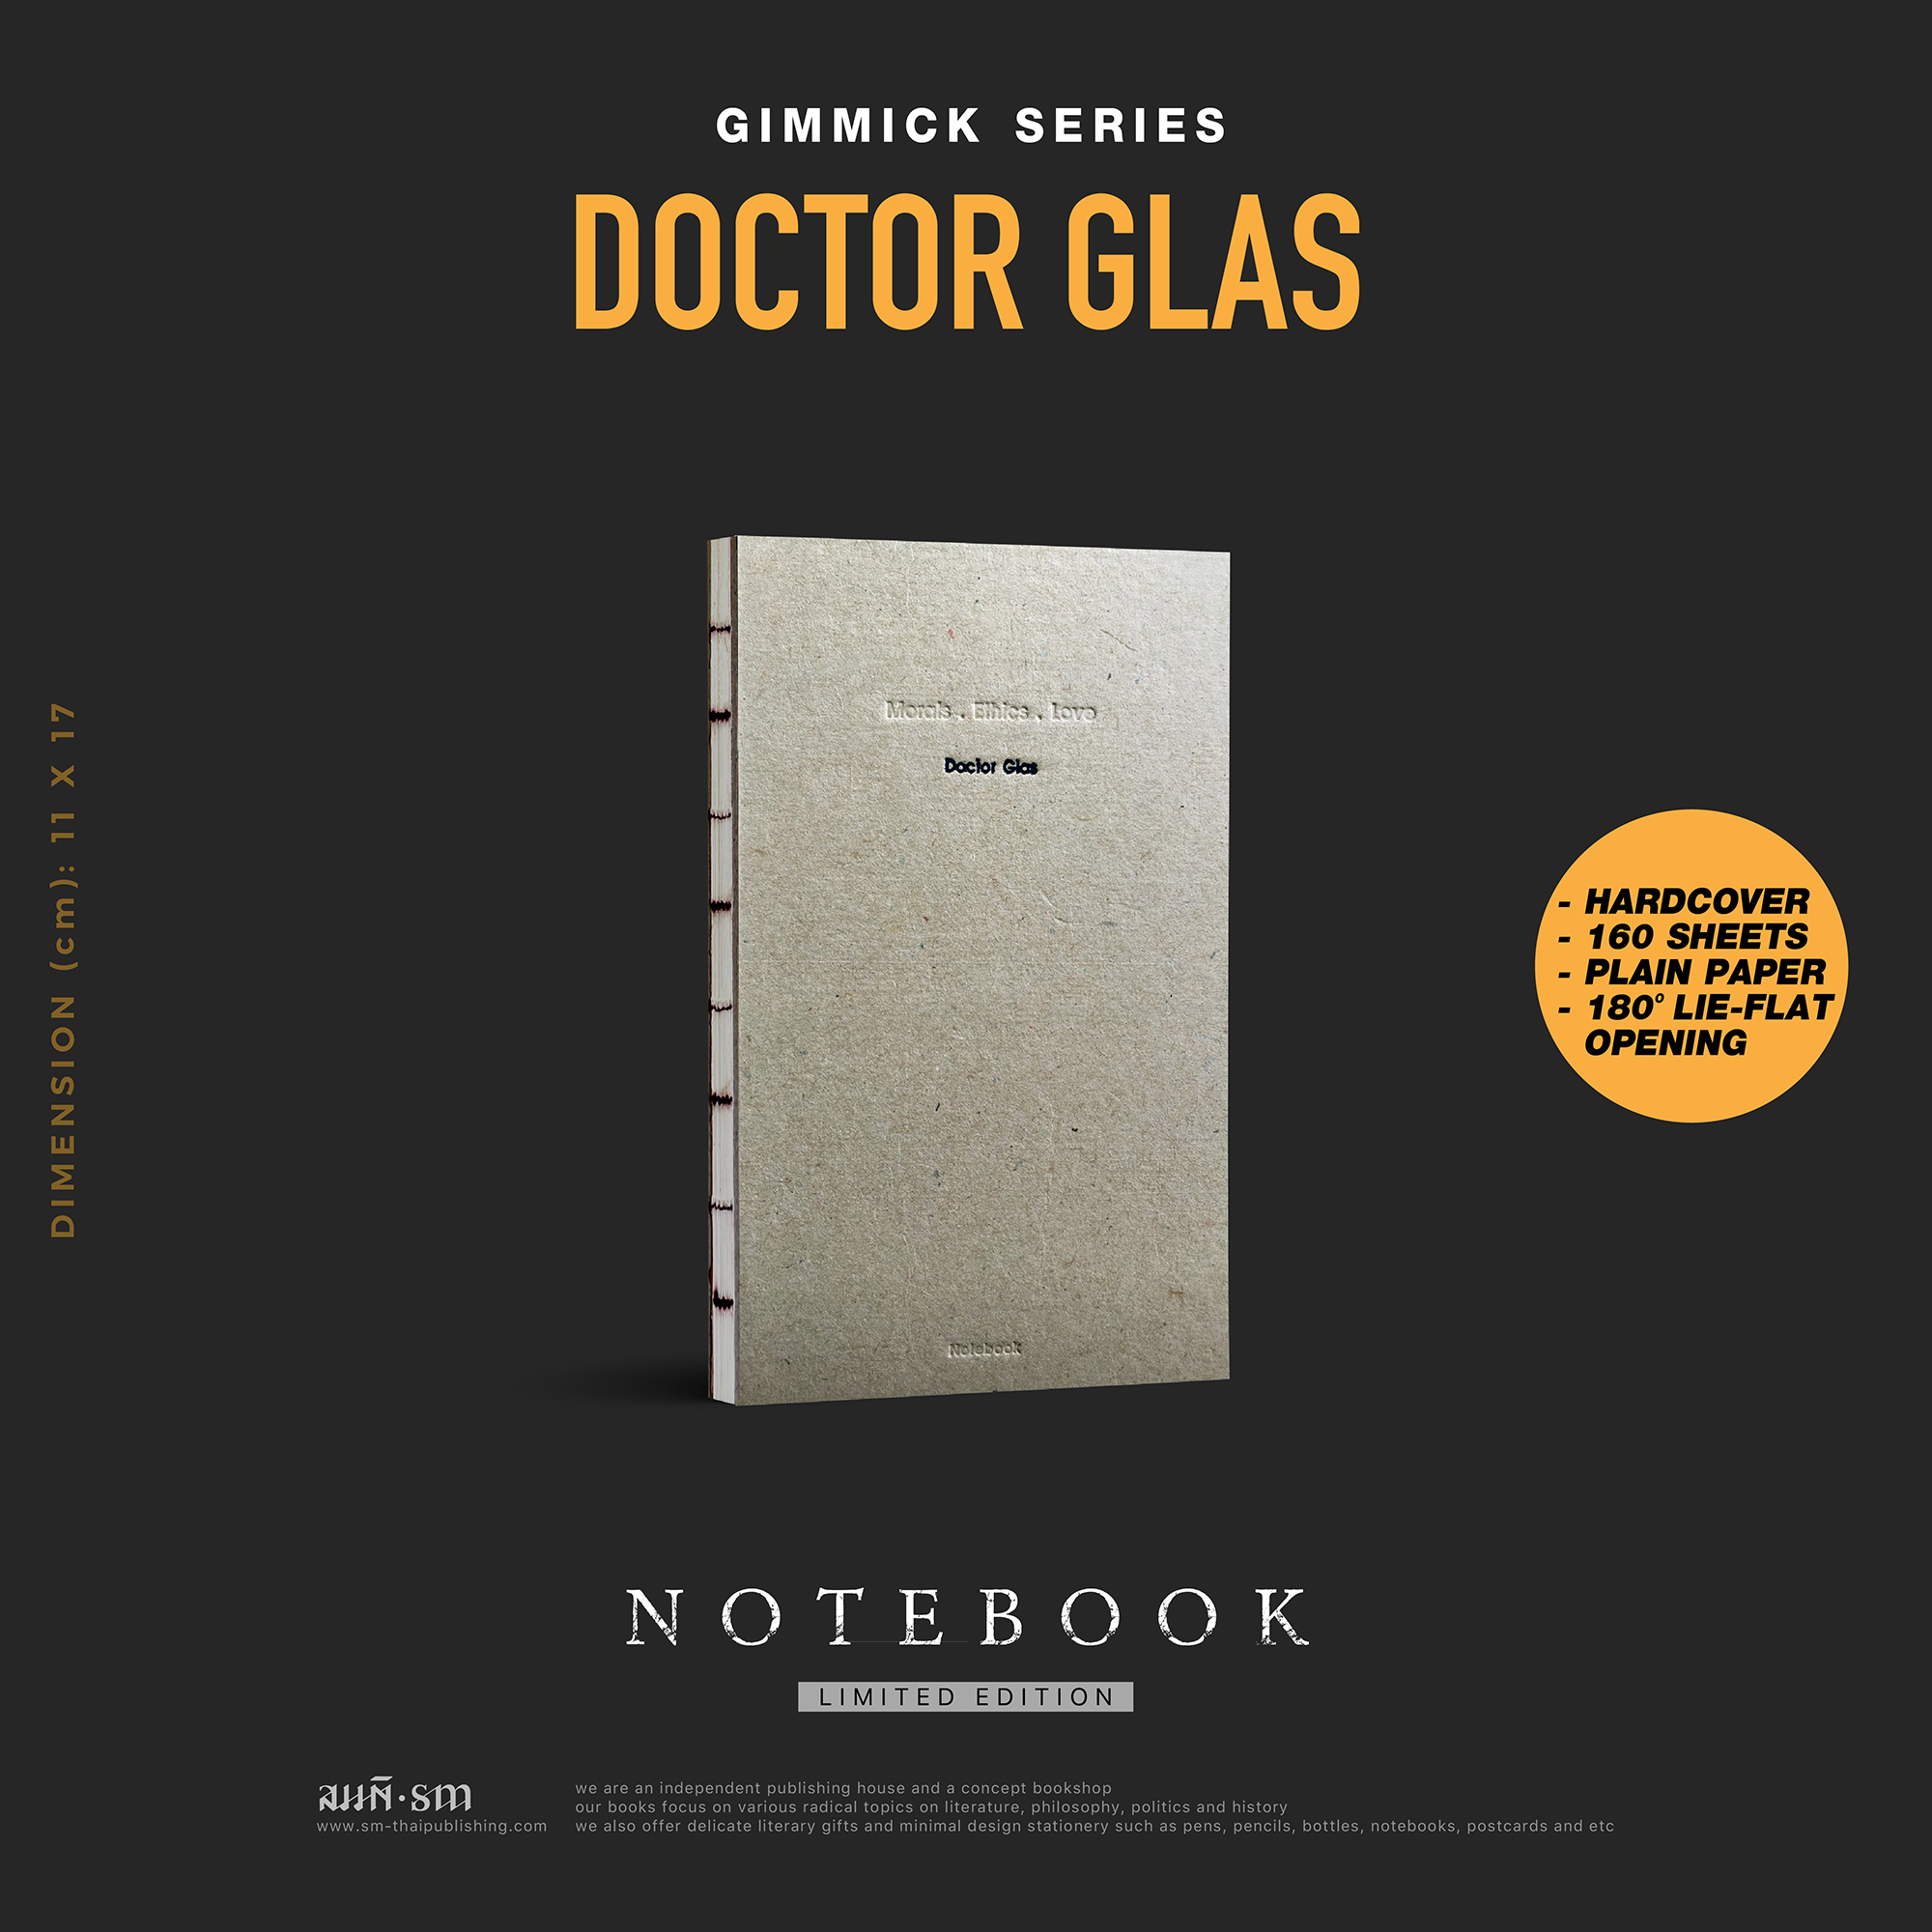 Doctor Glas - Notebook Gimmick | สมุดบันทึกของคอวรรณกรรม